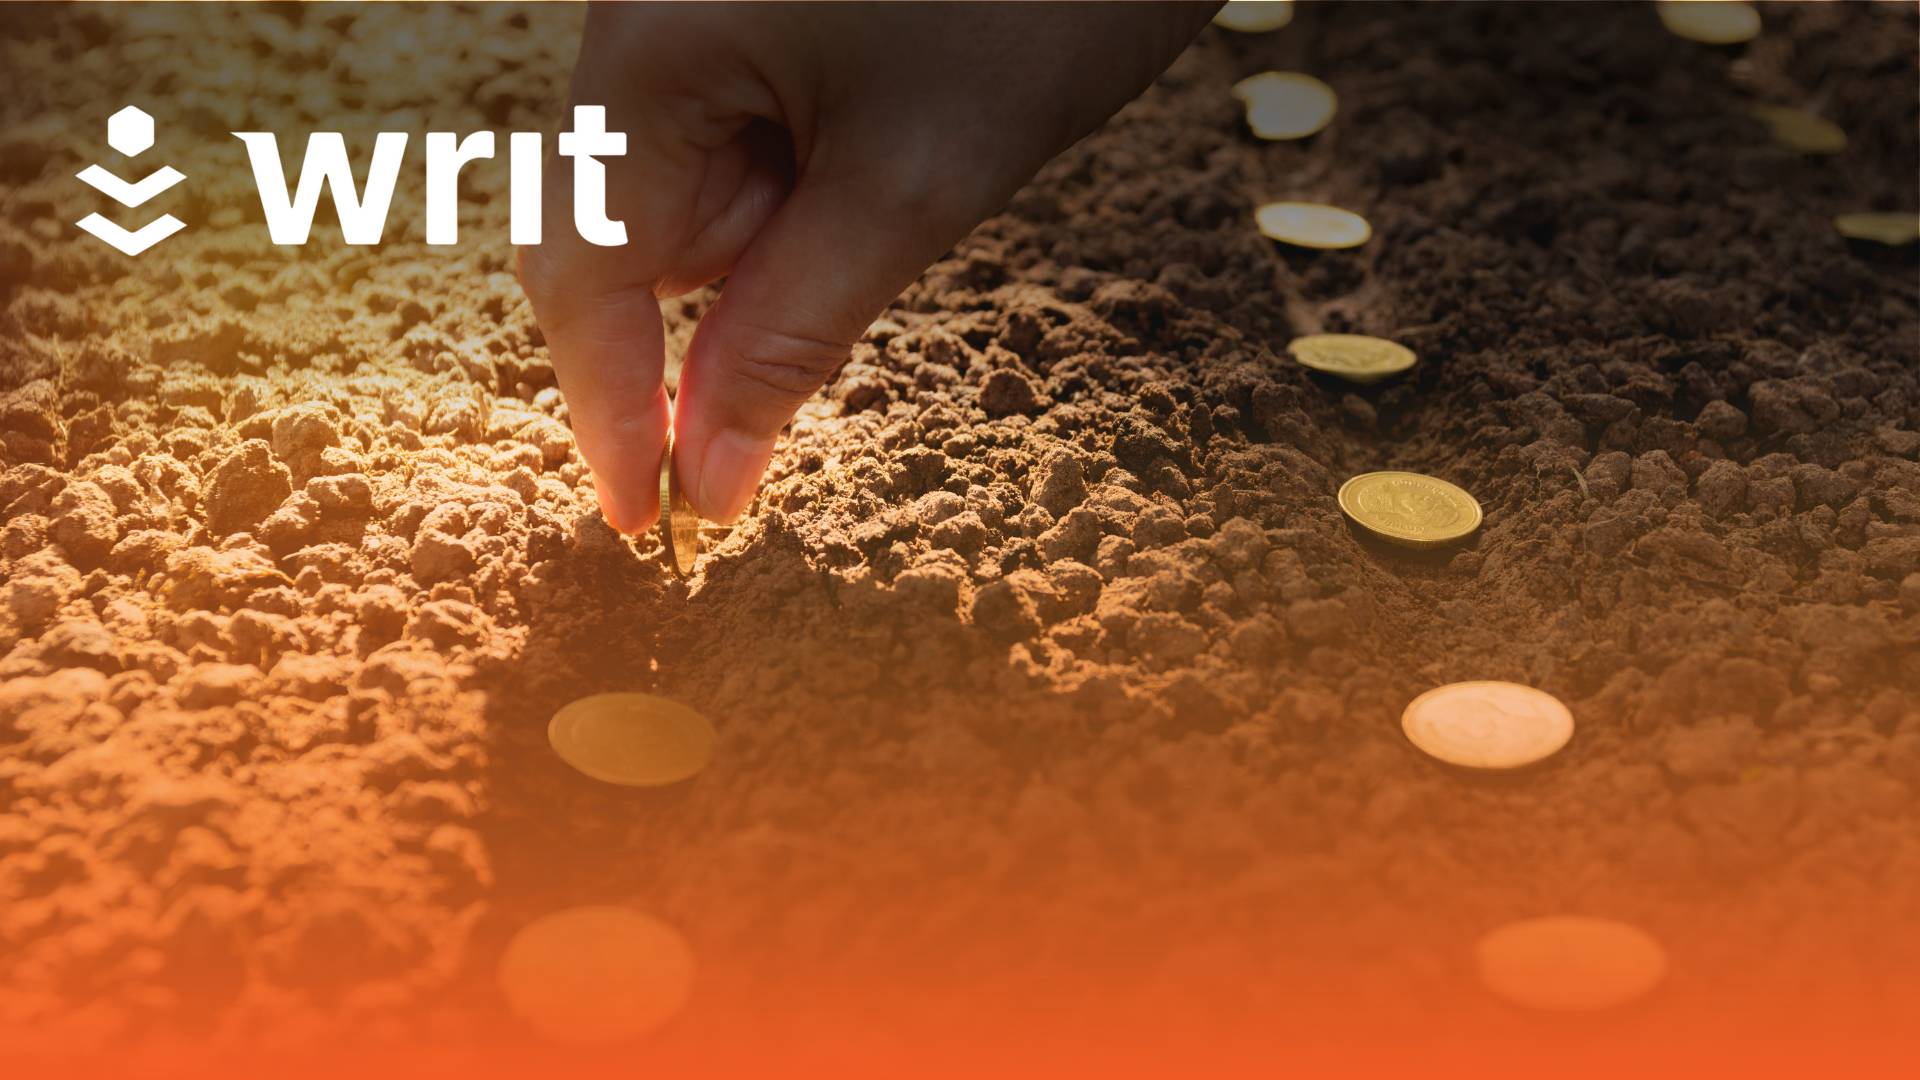 Writ Secures $3.8M in Series Seed Funding Led by Gradient Ventures